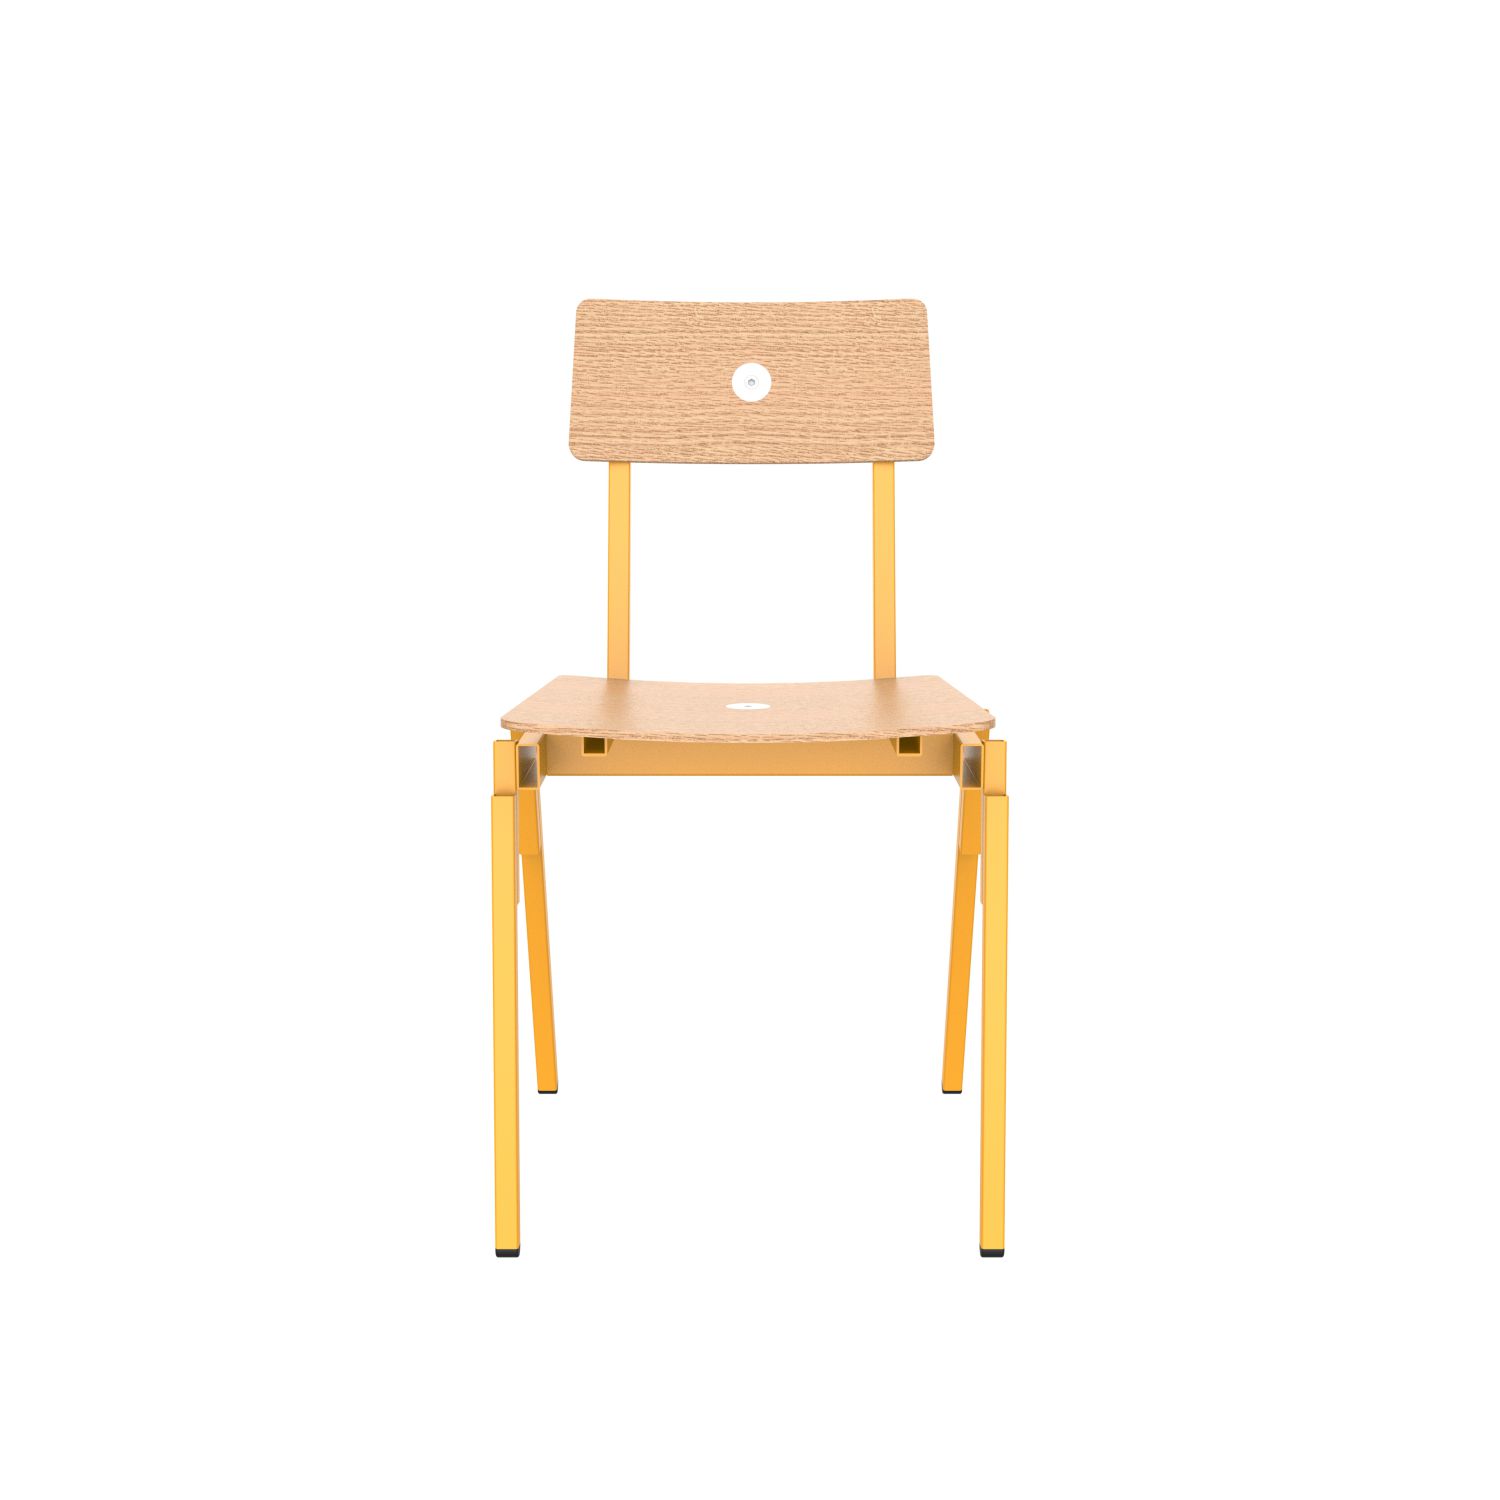 lensvelt piet hein eek mitw wooden chair without armrests natural oak signal yellow ral1003 hard leg ends